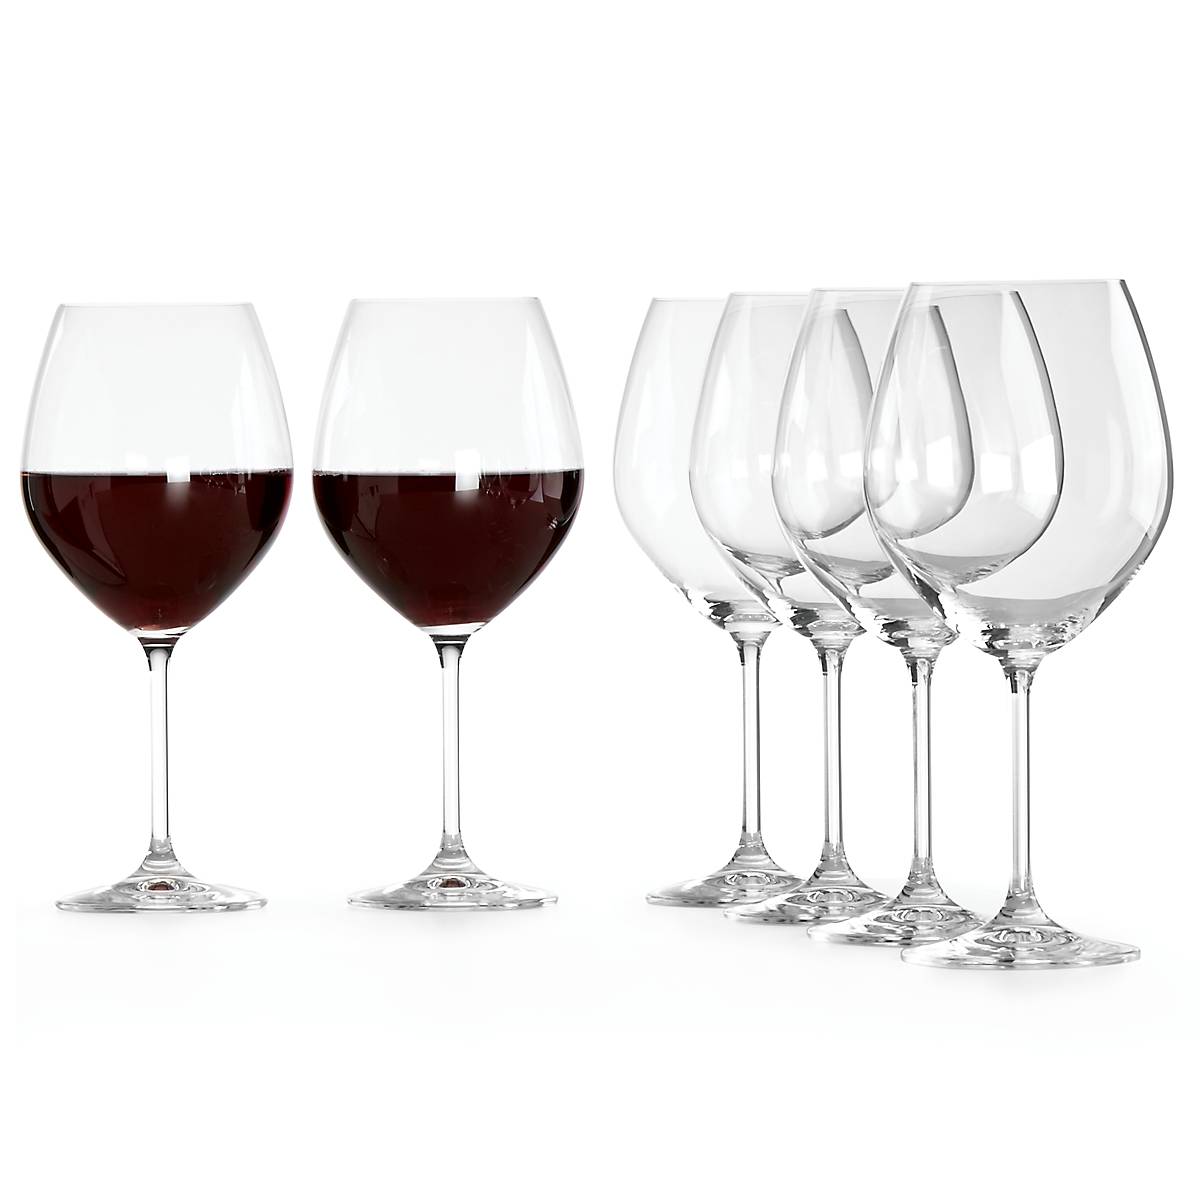 6.5oz Experience Port Wine Glasses (Set of 4)